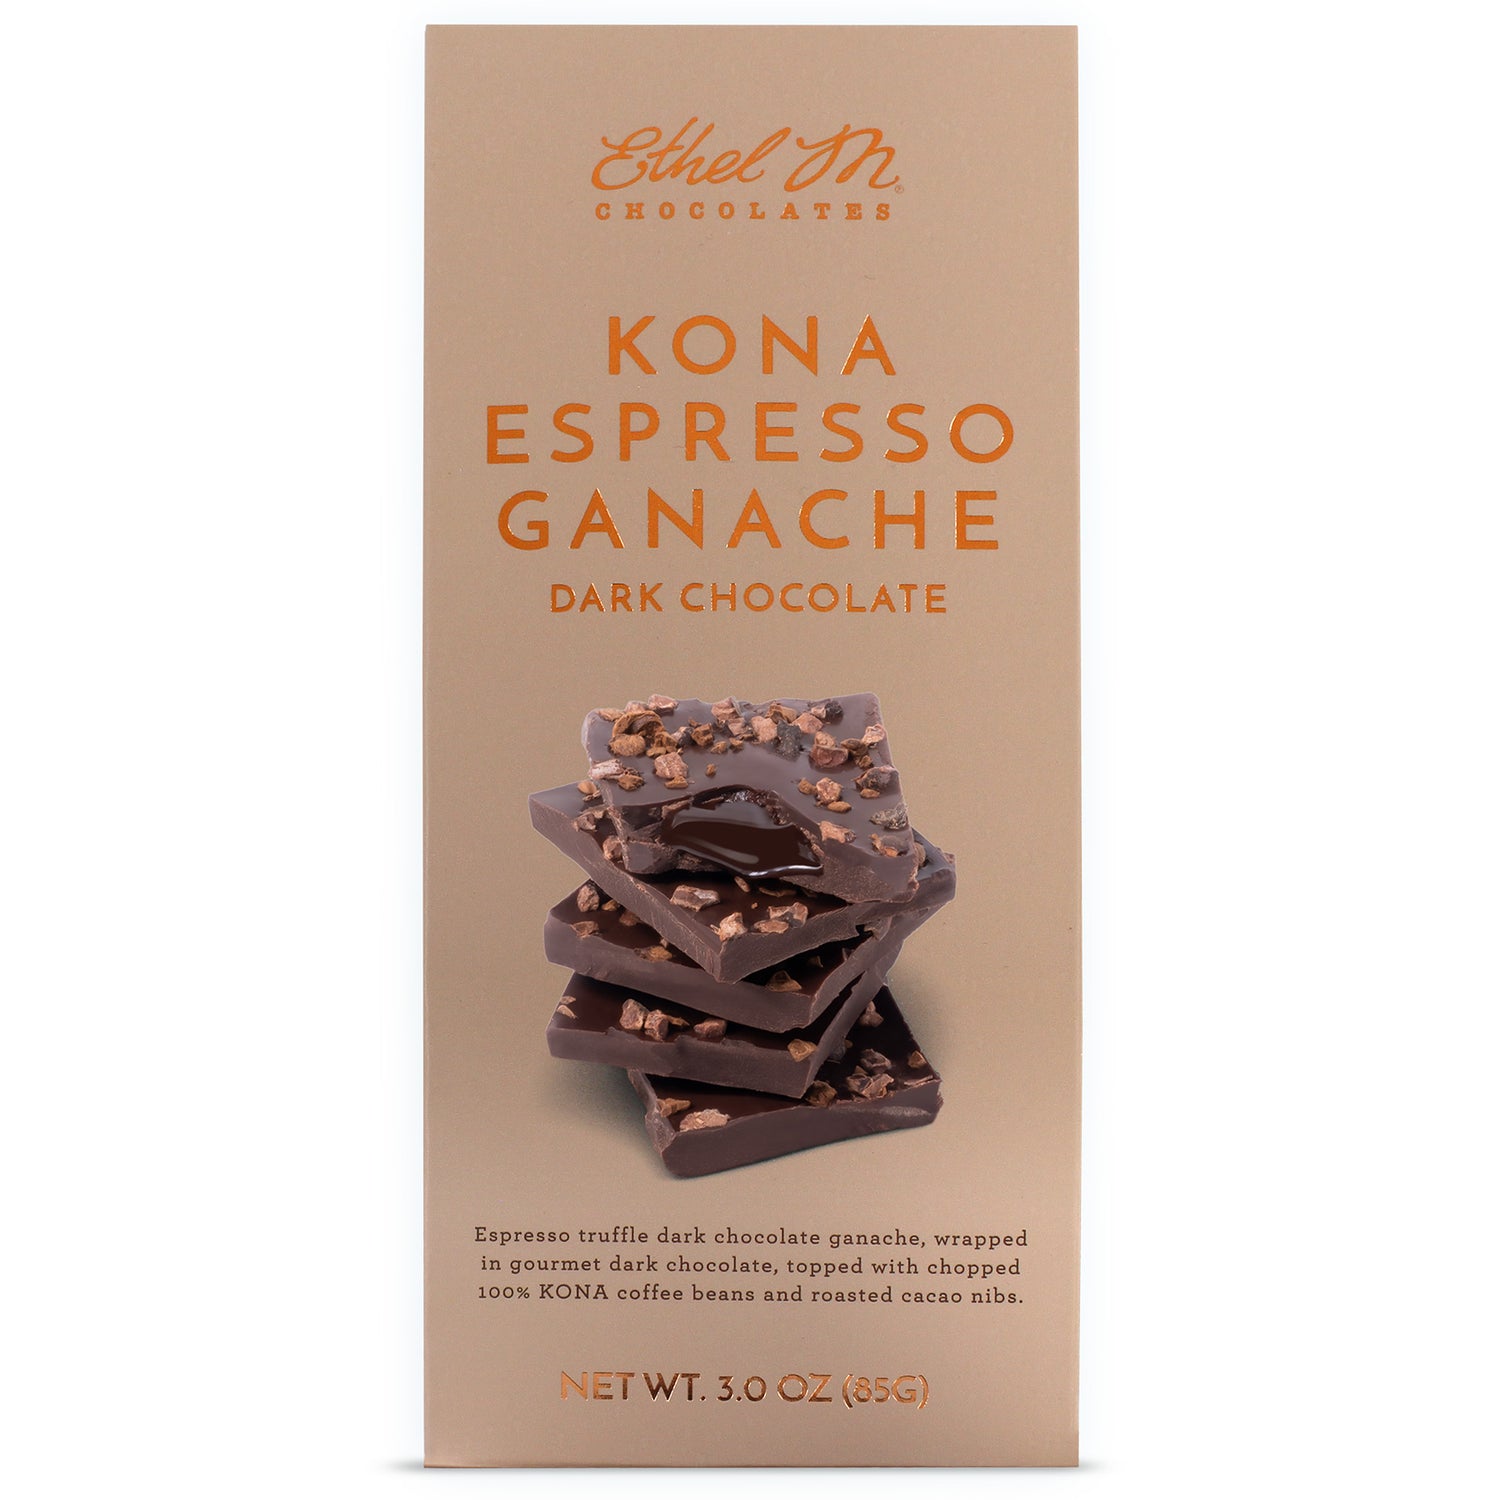 Ethel M Chocolates Kona Espresso Ganache Artisanal Dark Chocolate Bar